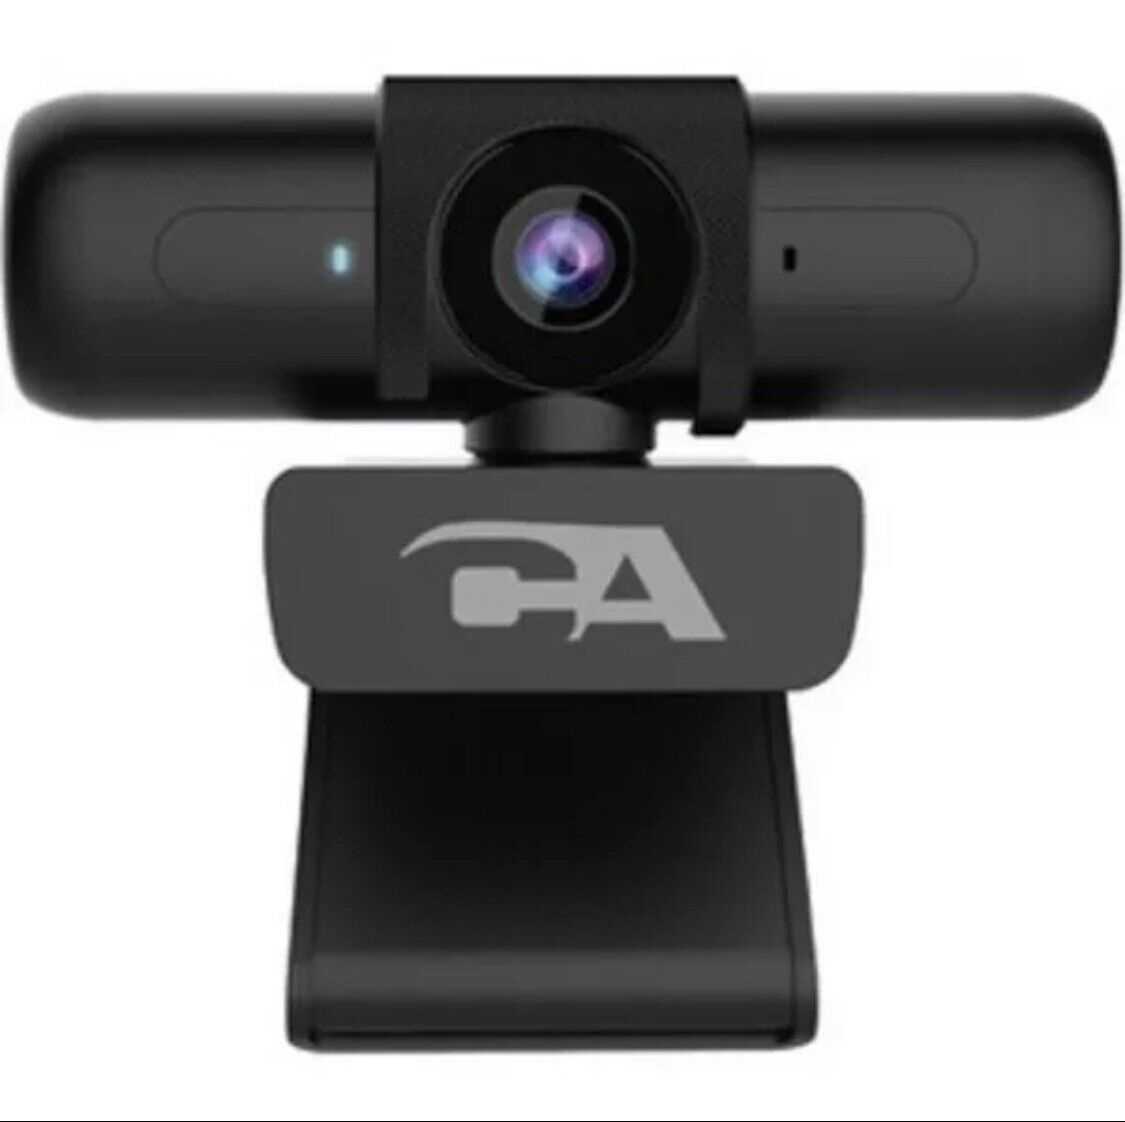 Cyber Acoustics WC2000 Webcam - 2 Megapixel - 30 fps - USB - 1920 x 1080 Vide...